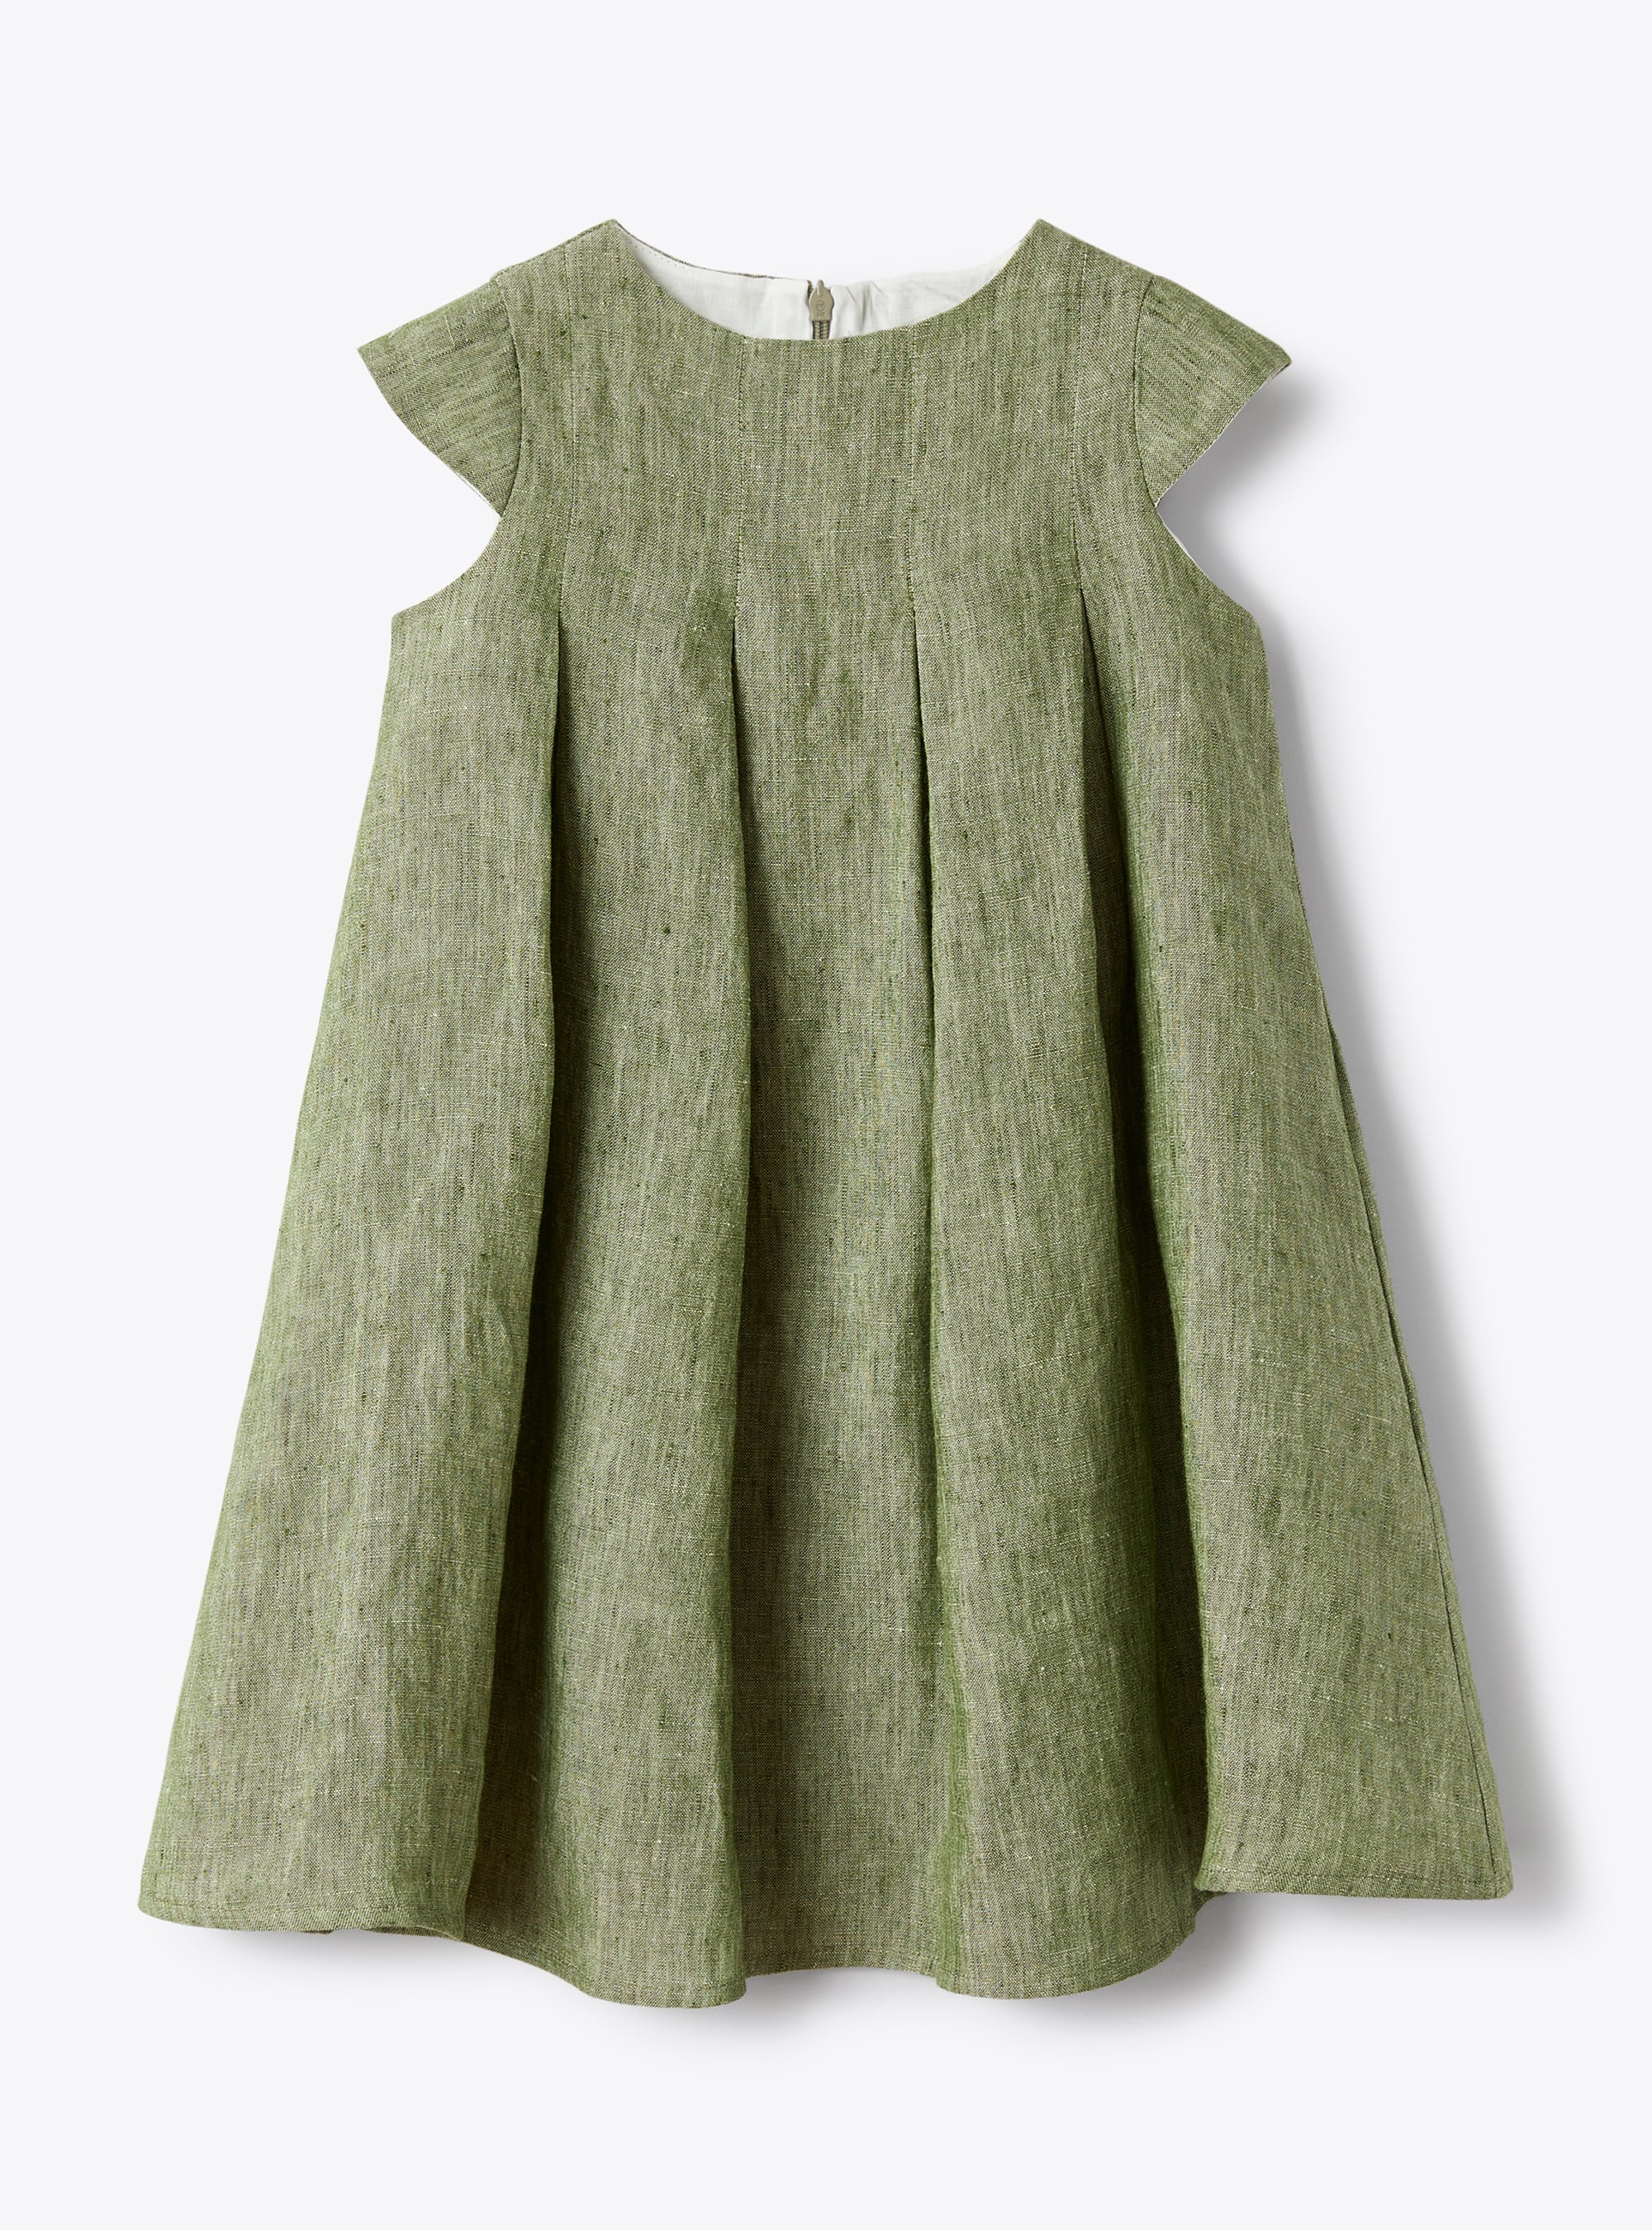 Dress in sage-green linen - Dresses - Il Gufo